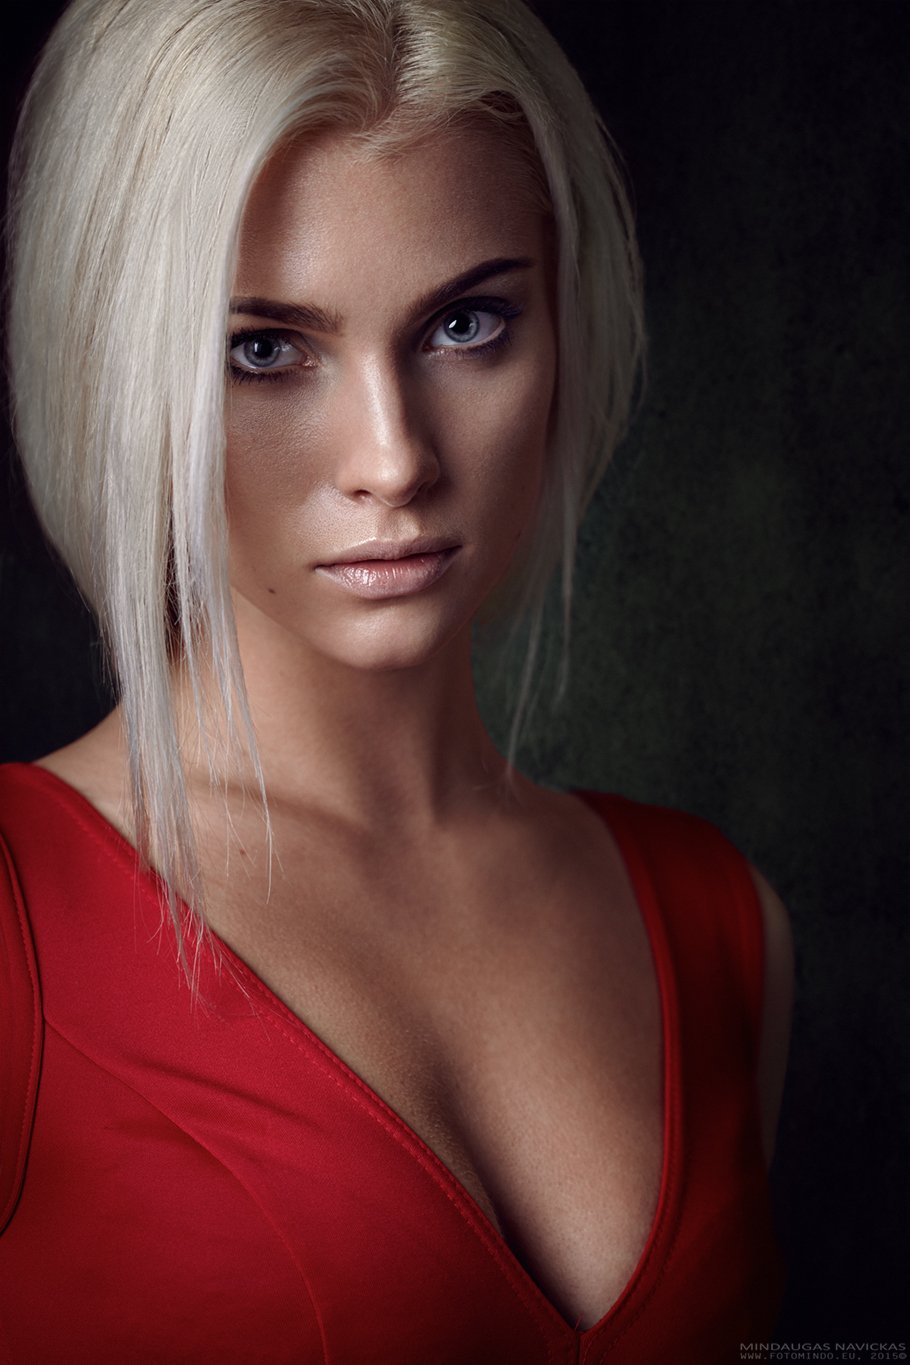 Mindaugas Navickas Women Blonde Short Hair Straight Hair Blue Eyes Looking At Viewer Red Dress Red C 910x1365